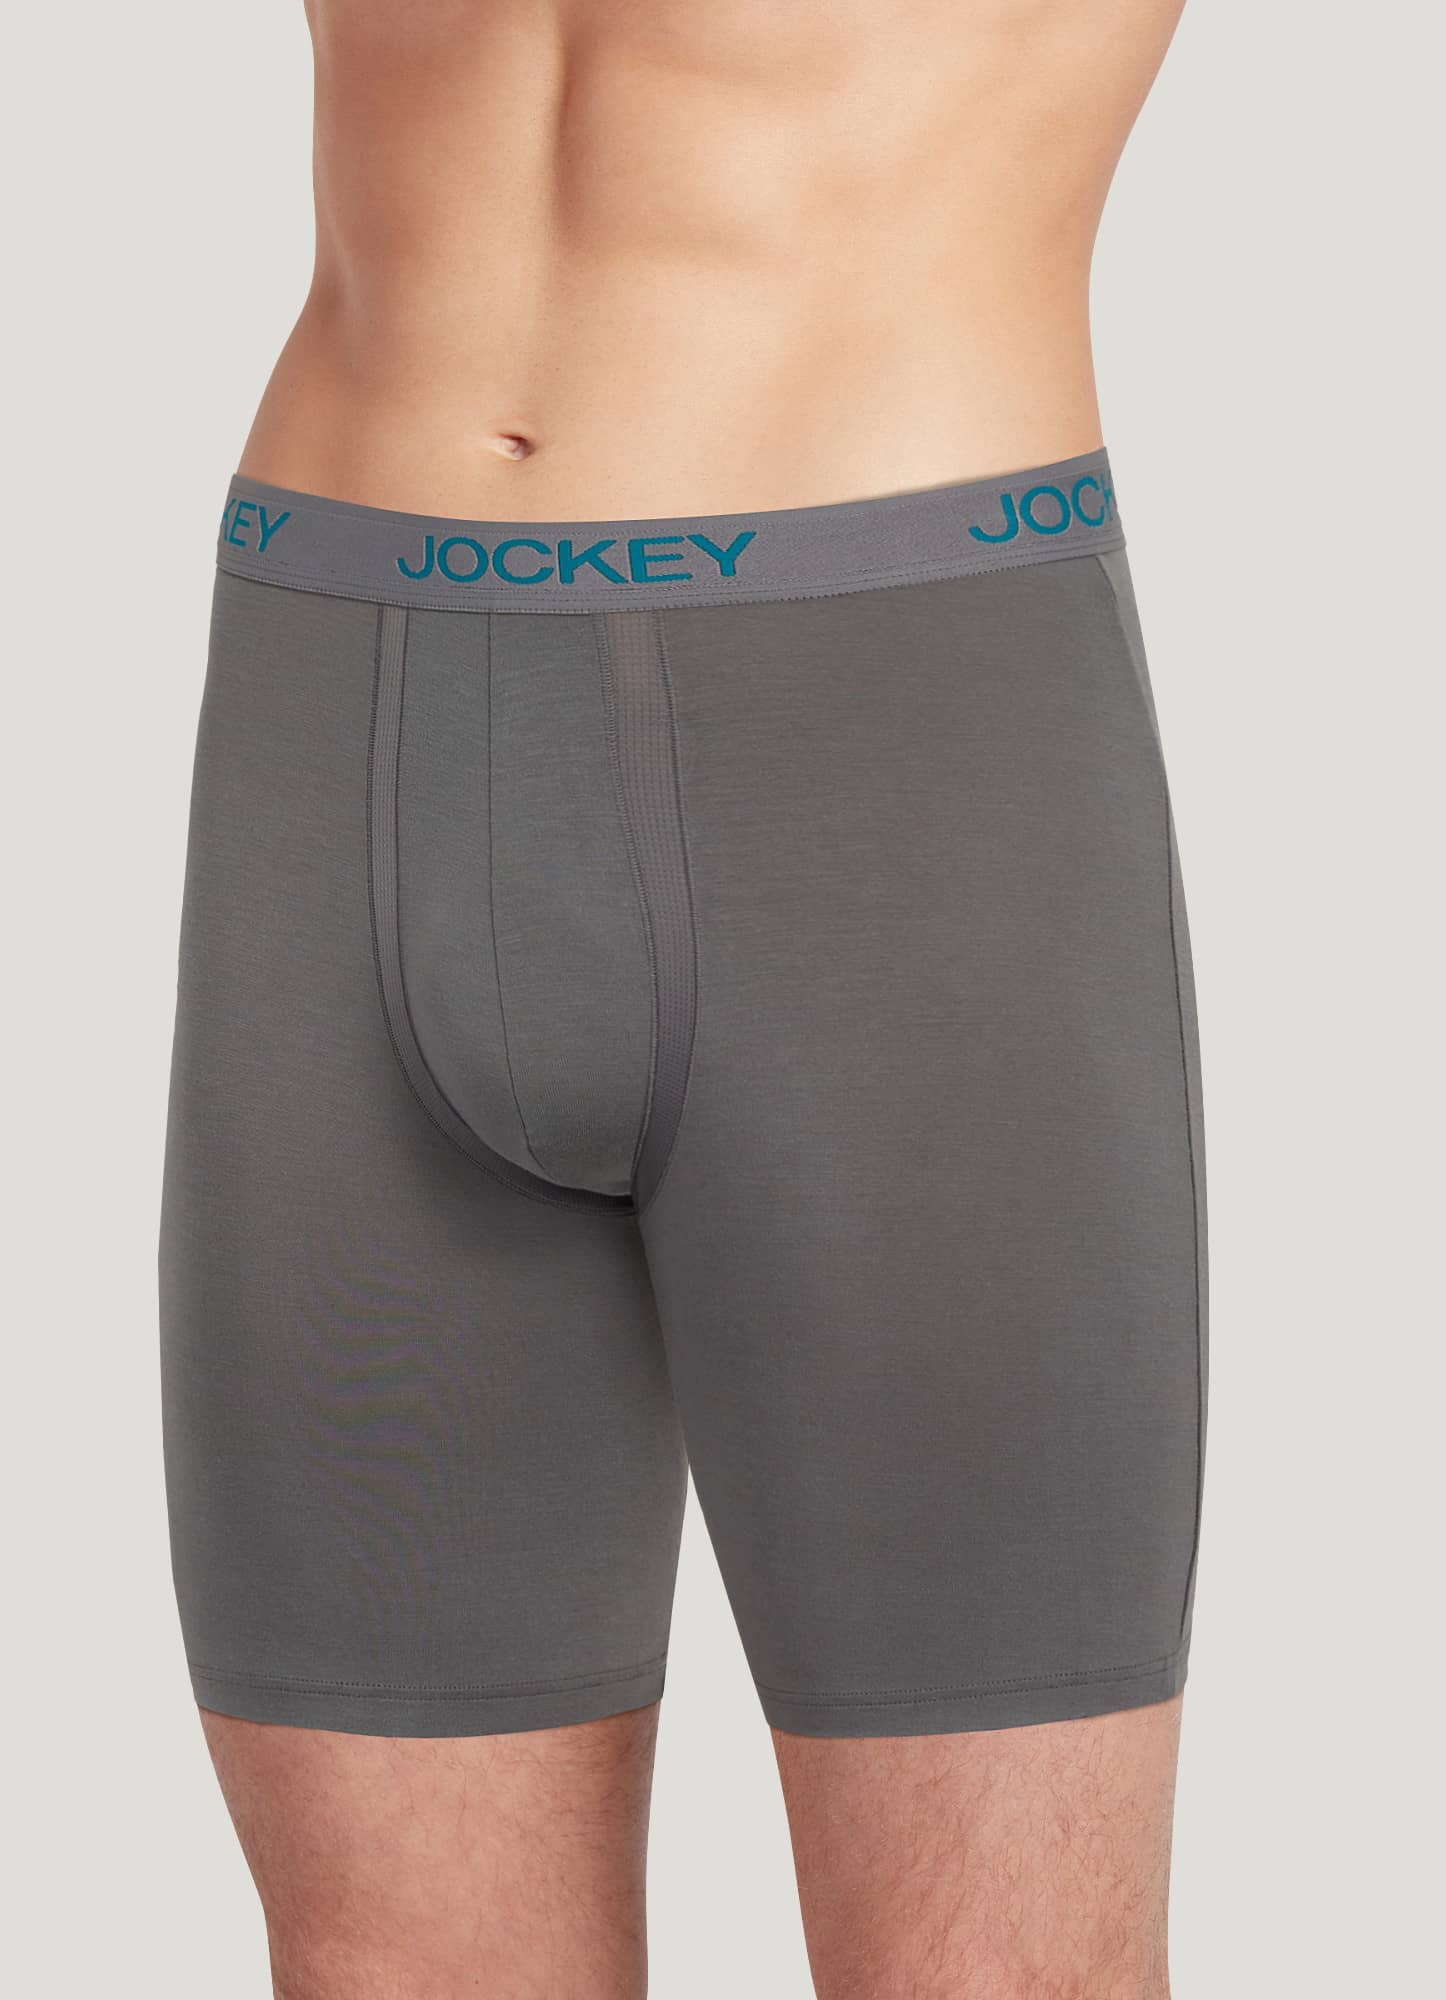 Jockey Men's Underwear Sport Microfiber 7 Boxer Brief, Midnight